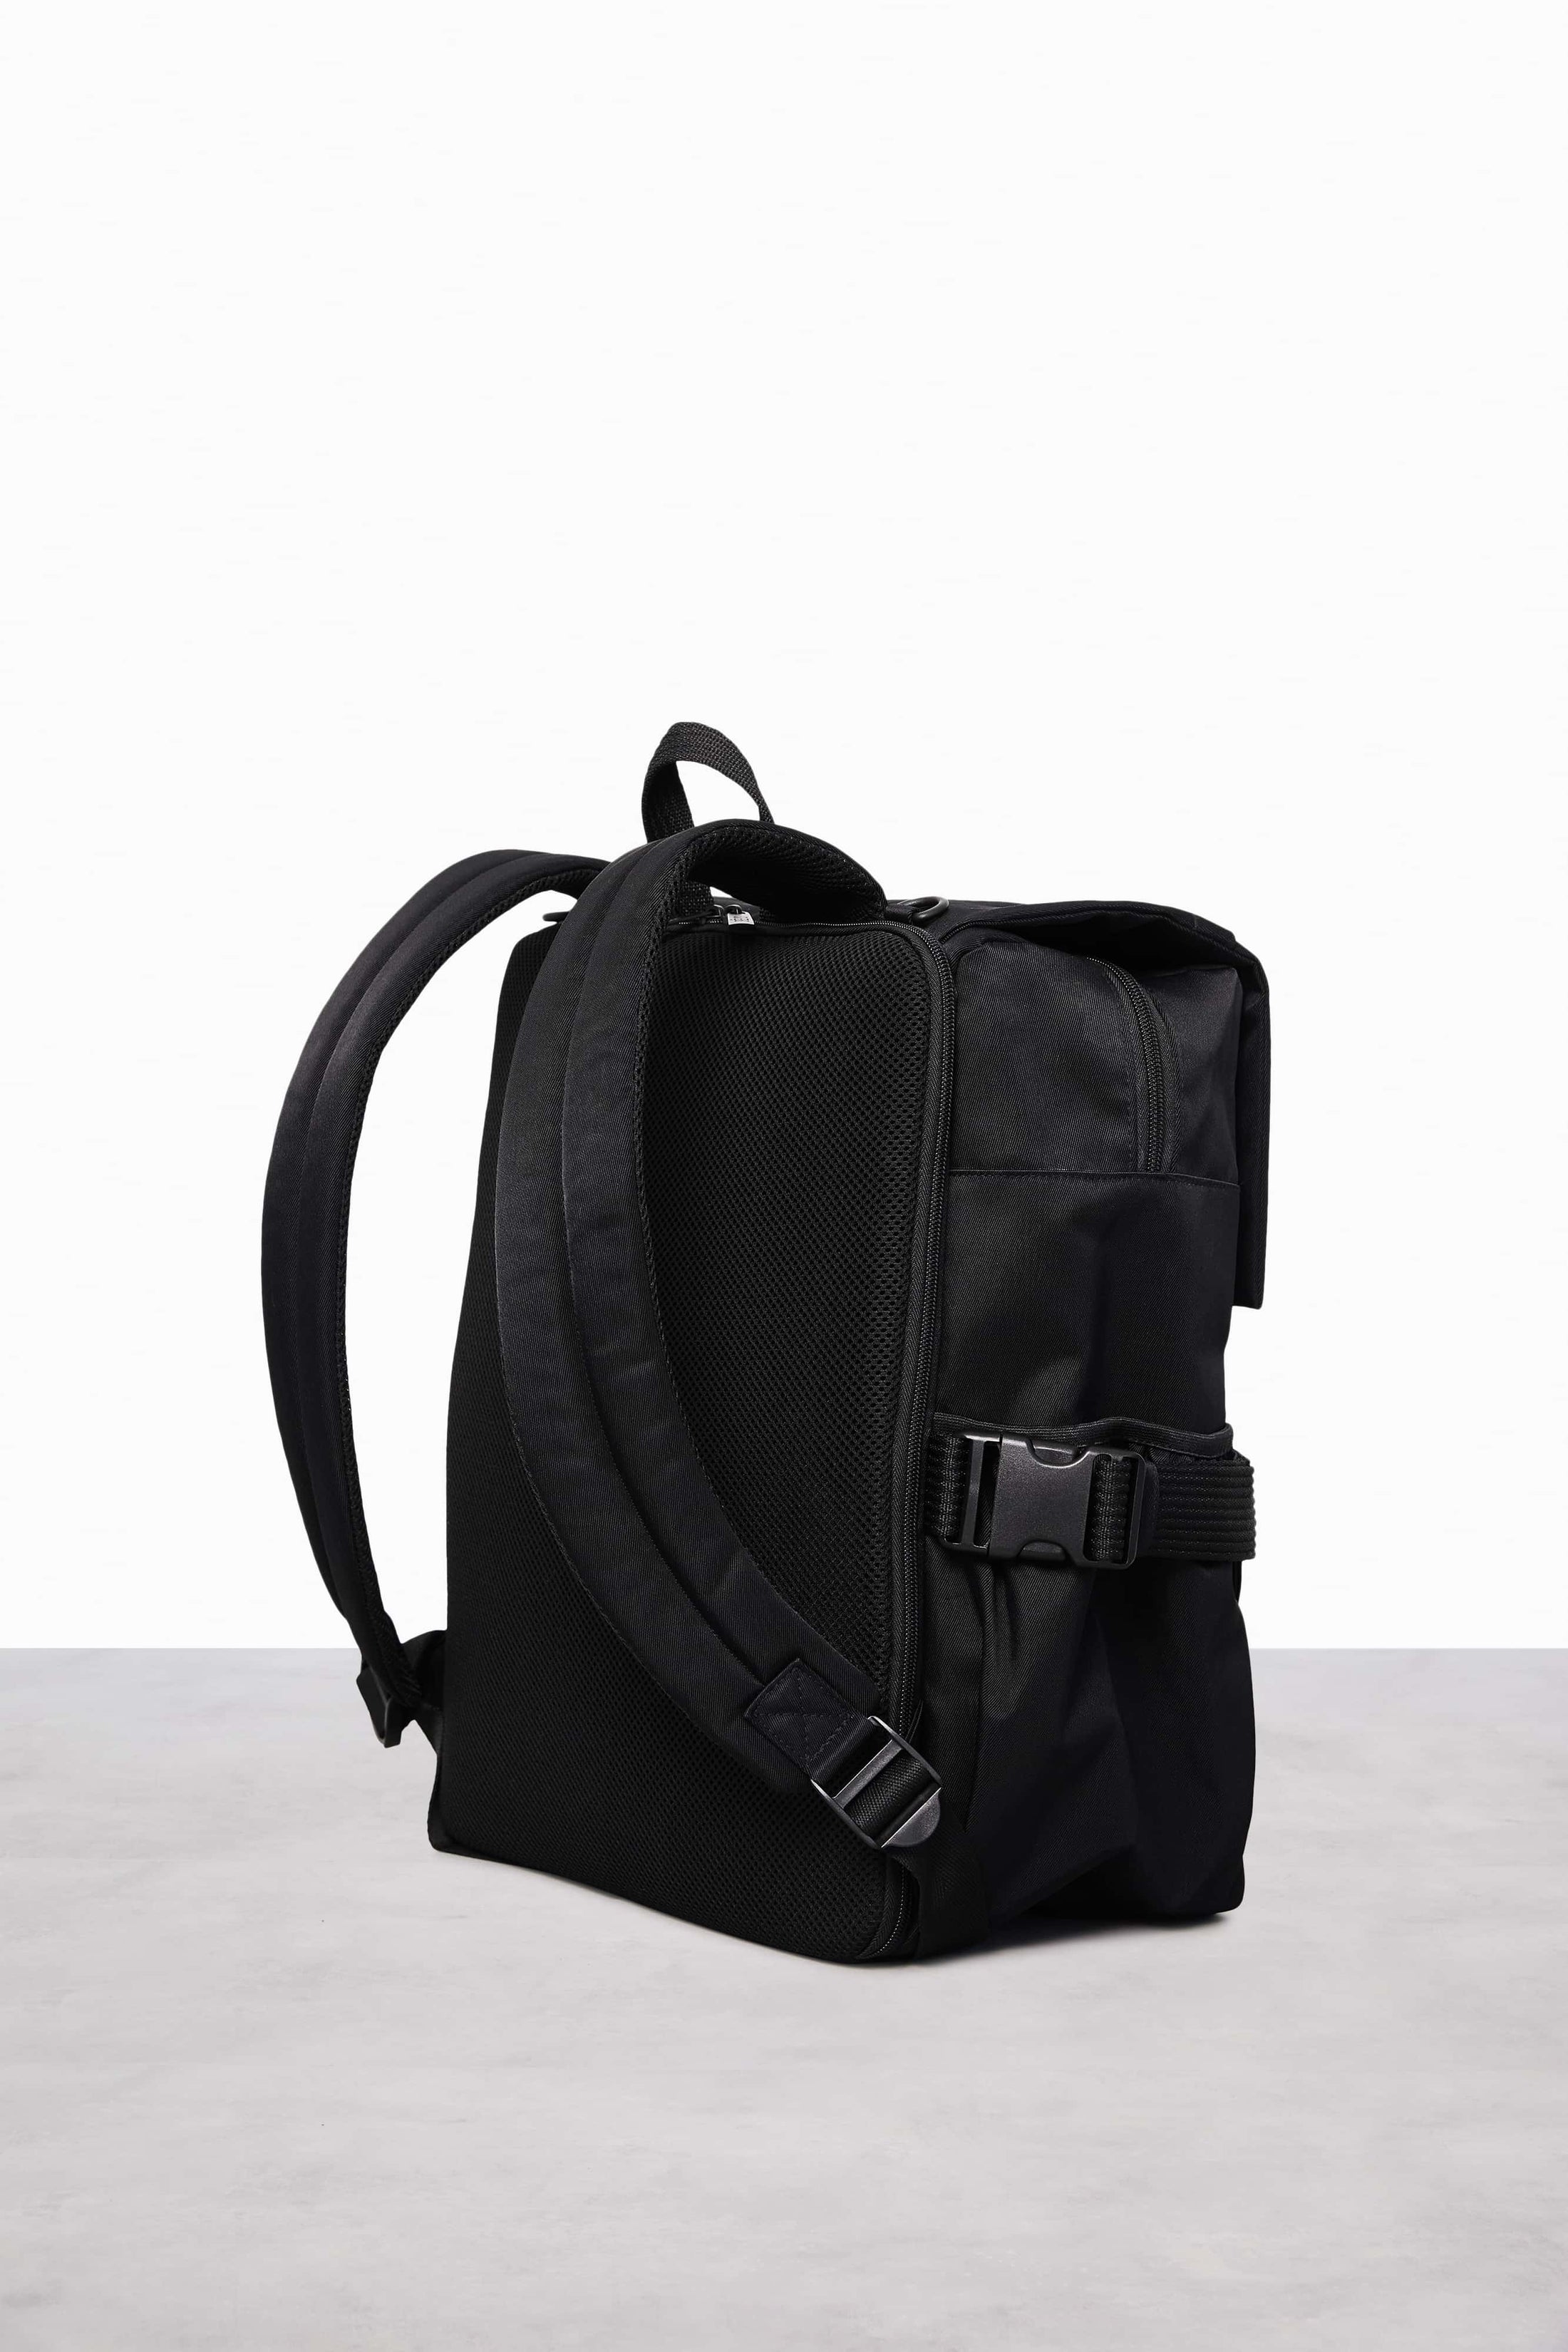 BÉIS 'The Ultimate Diaper Backpack' in Black - Diaper Bag Backpack ...